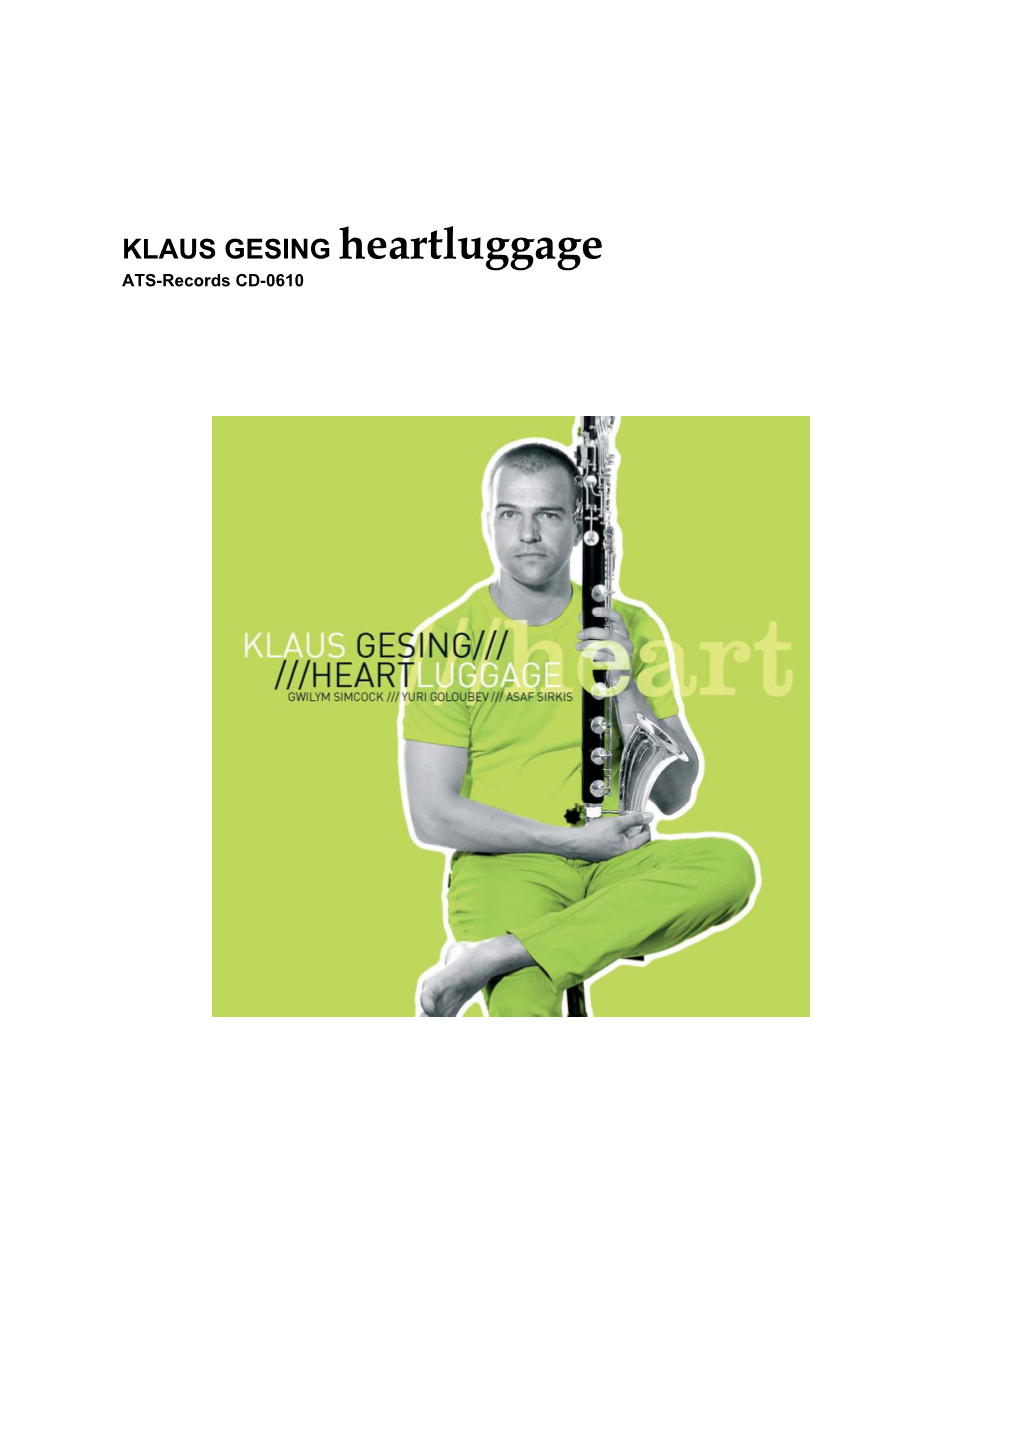 KLAUS GESING Heartluggage ATS-Records CD-0610